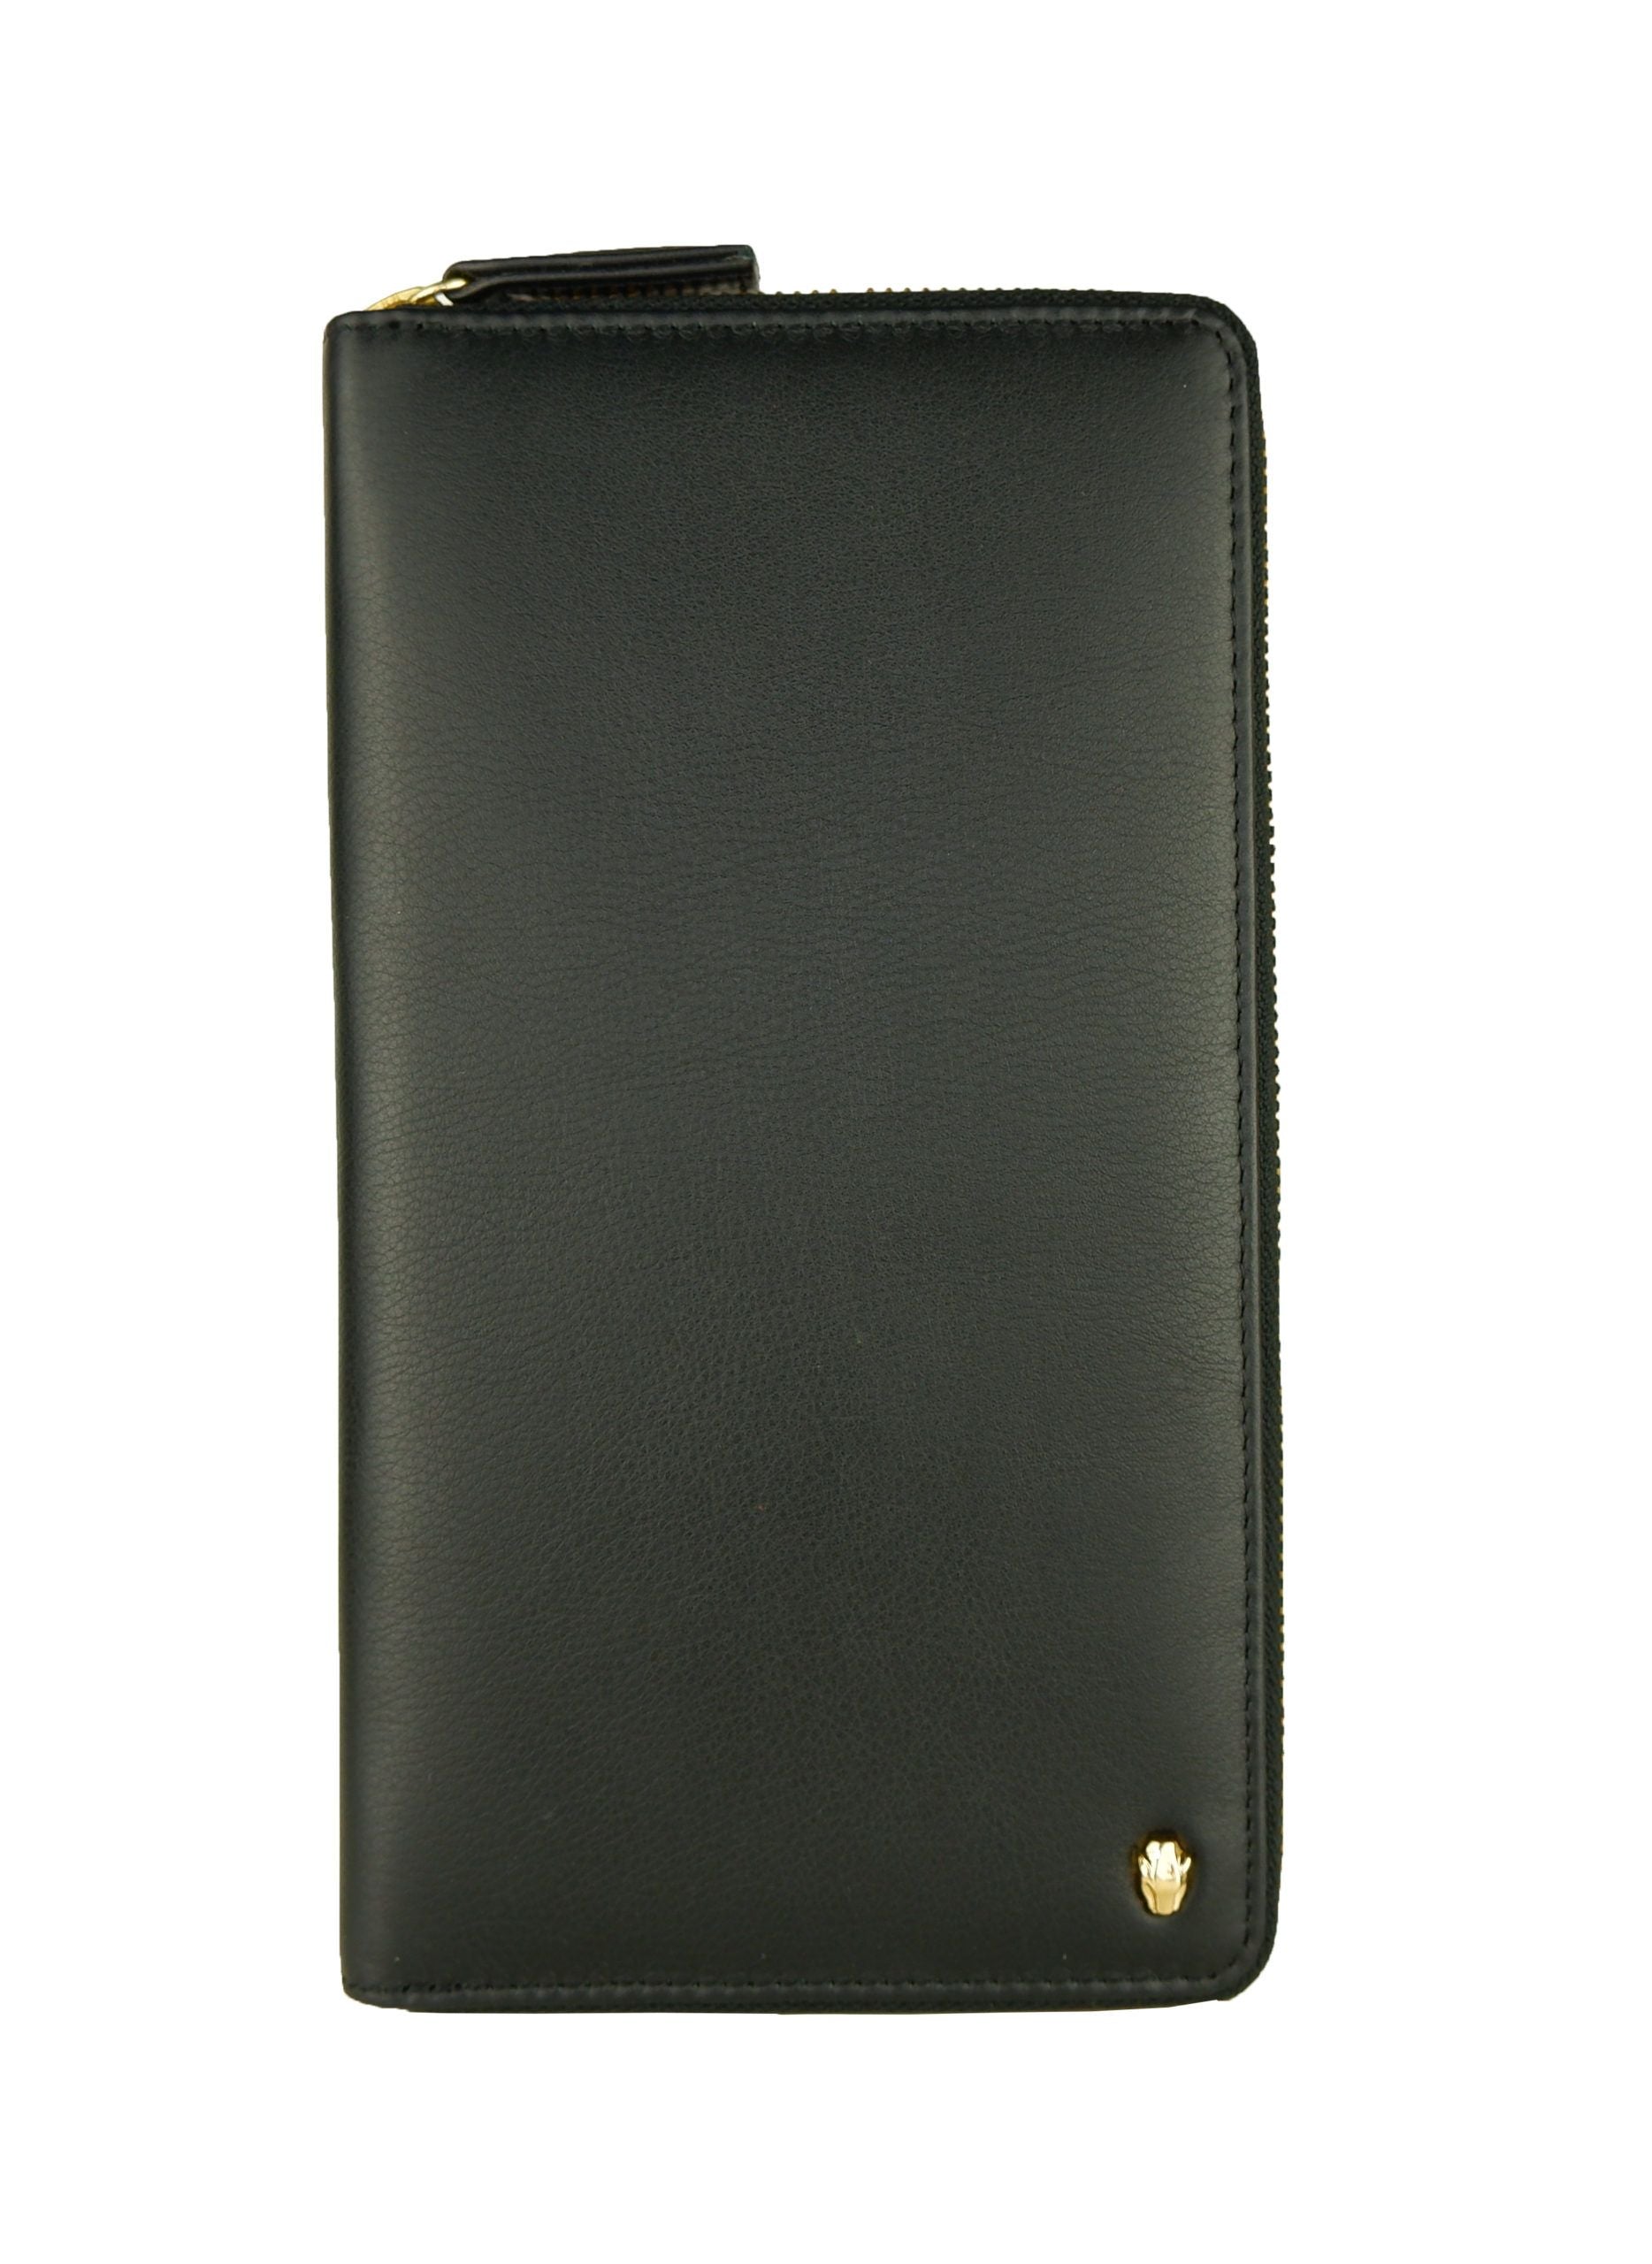 Cavalli Class Black Leather Wallet